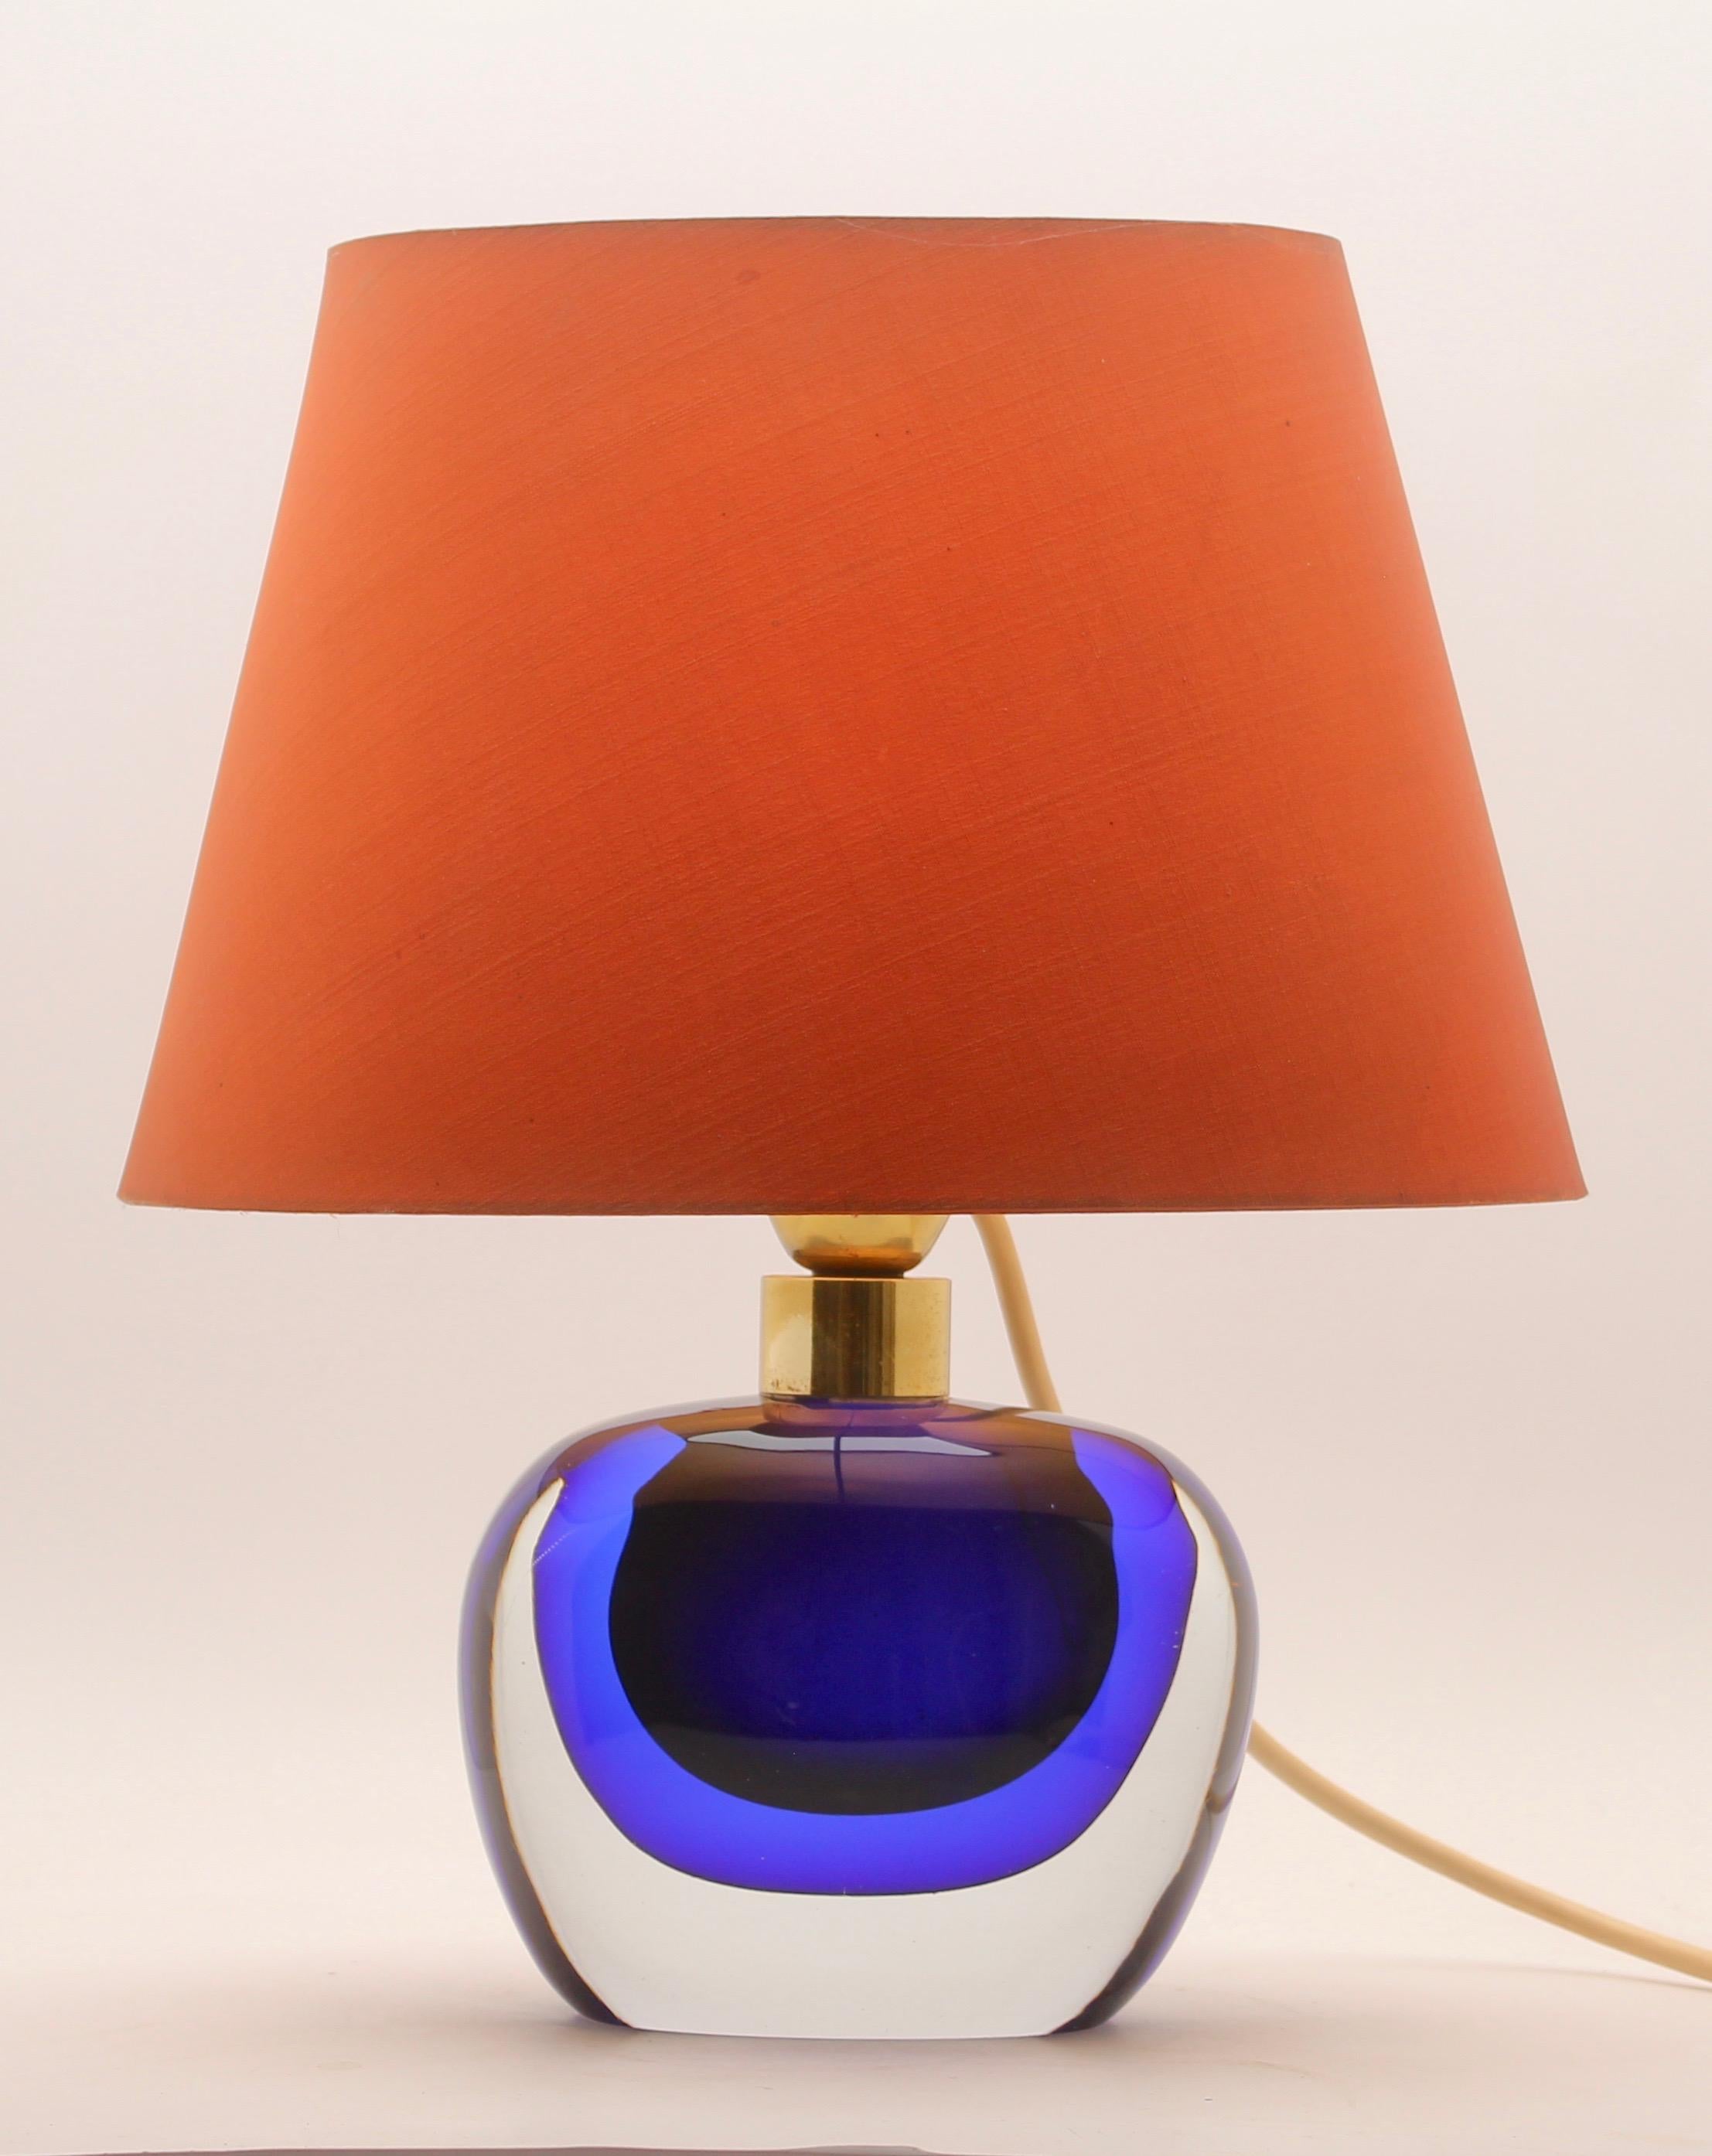 Murano Globe-Shaped Lamp Cobalt Blue with a Dramatic Jewel-Like Effect 2